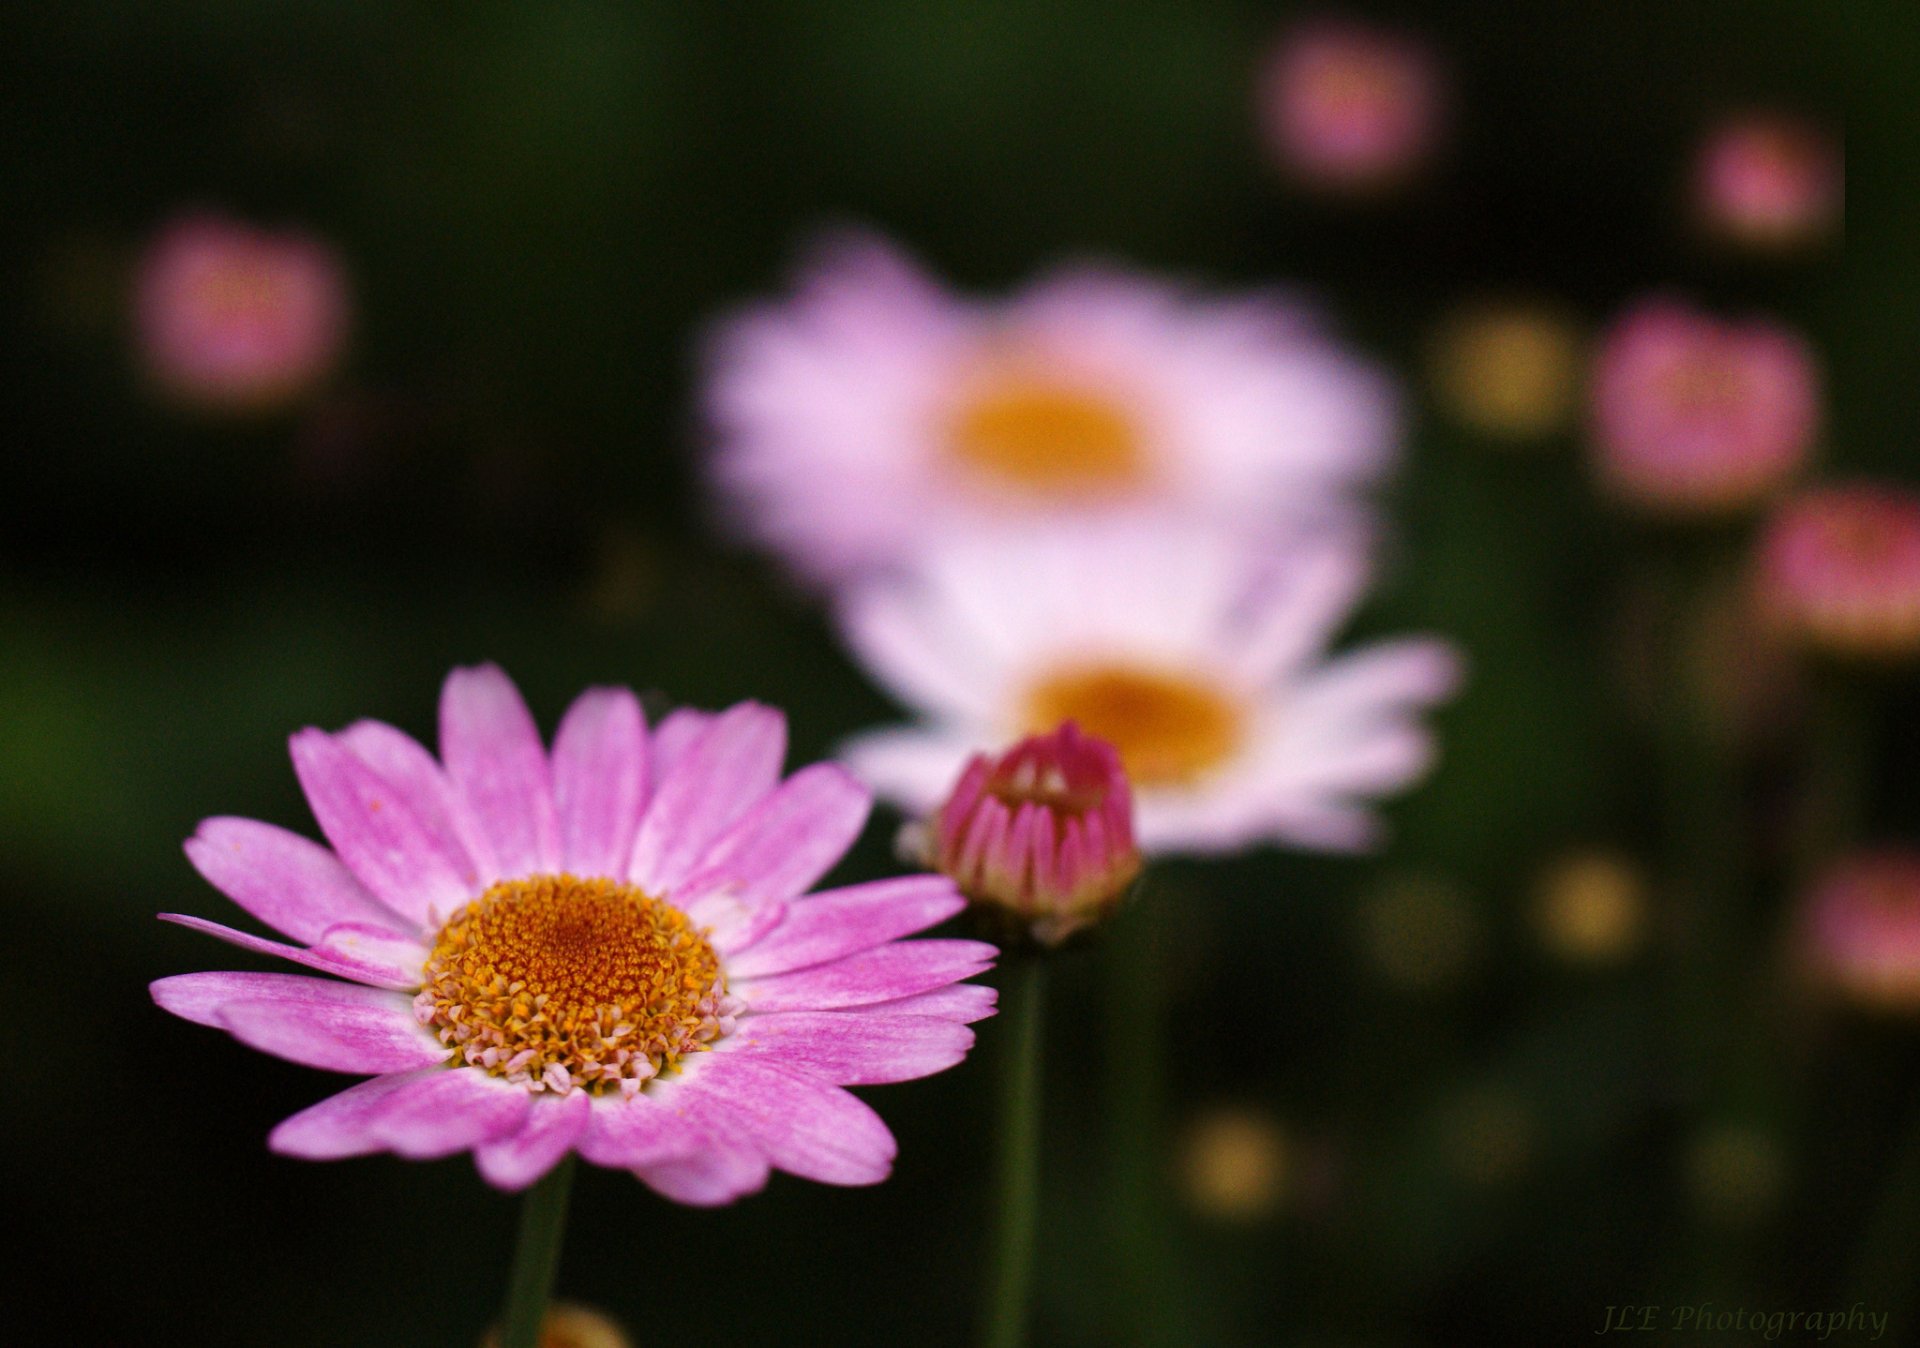 Download Blur Pink Flower Nature Flower Daisy  HD Wallpaper by Jacob Edmiston